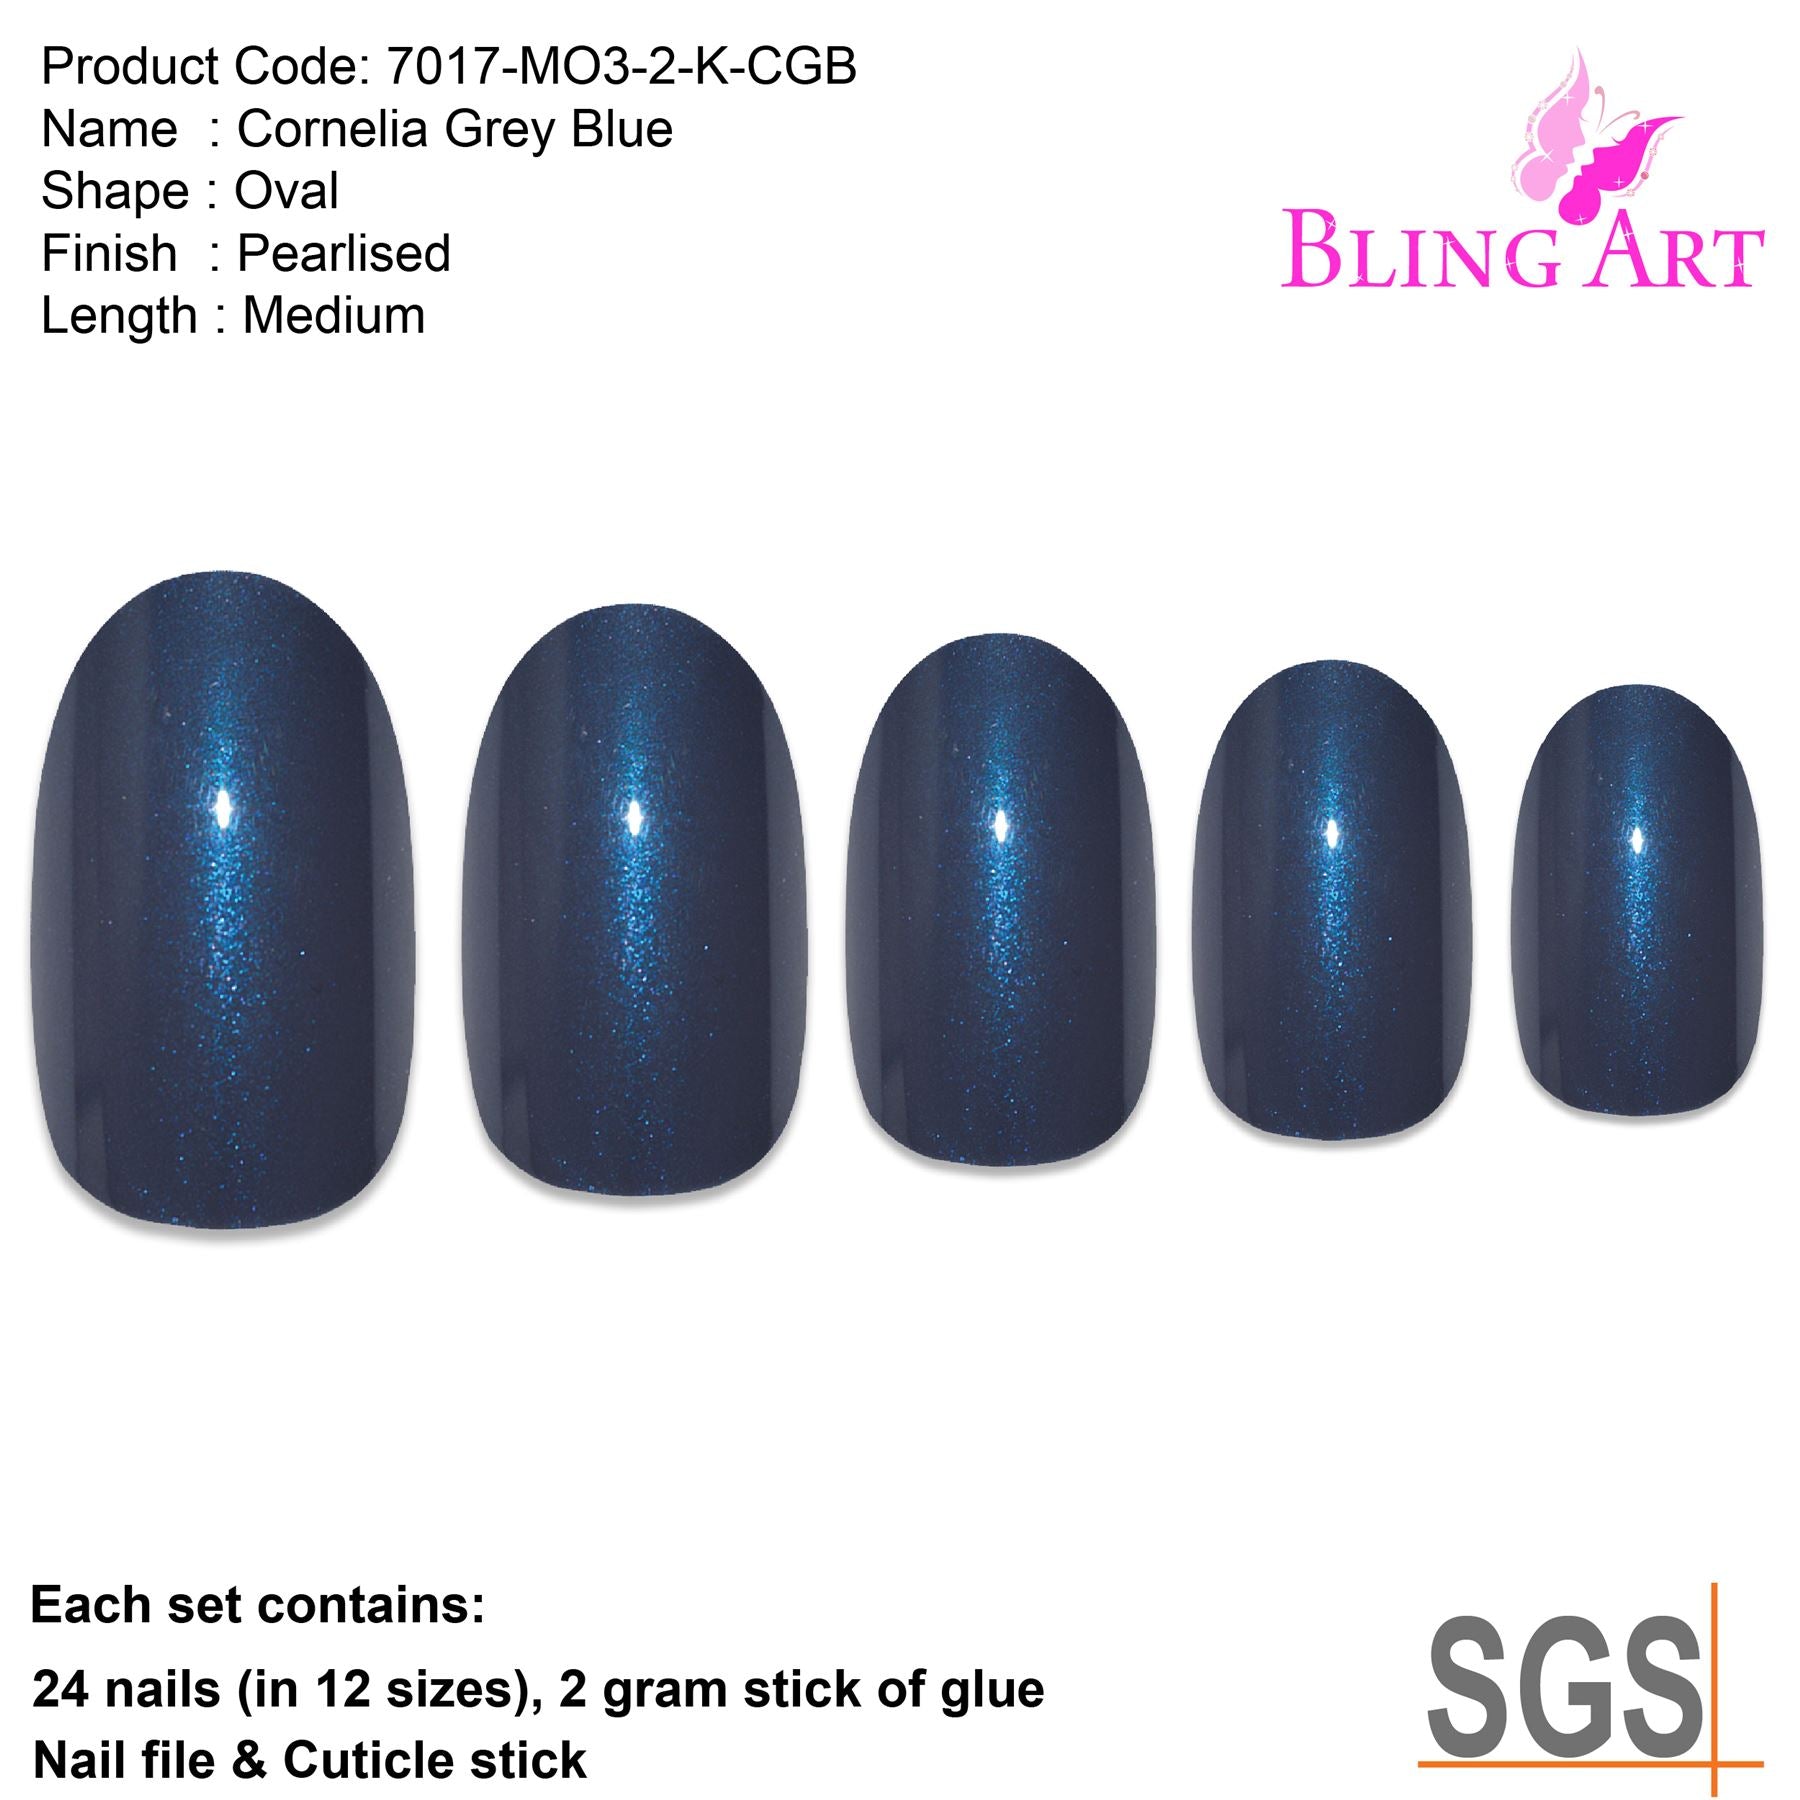 False Nails by Bling Art Grey Glitter Oval Medium Fake Acrylic 24 Tips with Glue